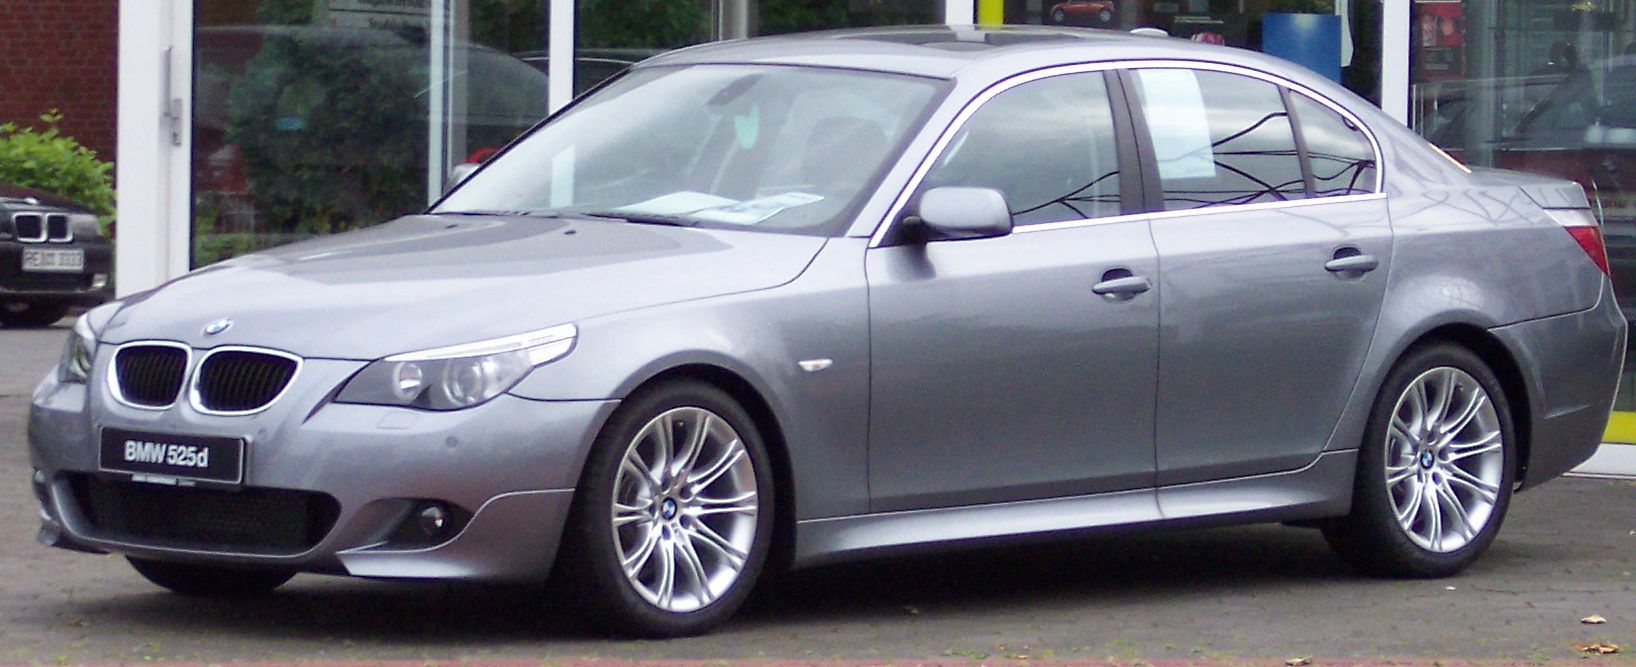 Dossier: BMW Series5 argent vl.jpg - Wikimedia Commons